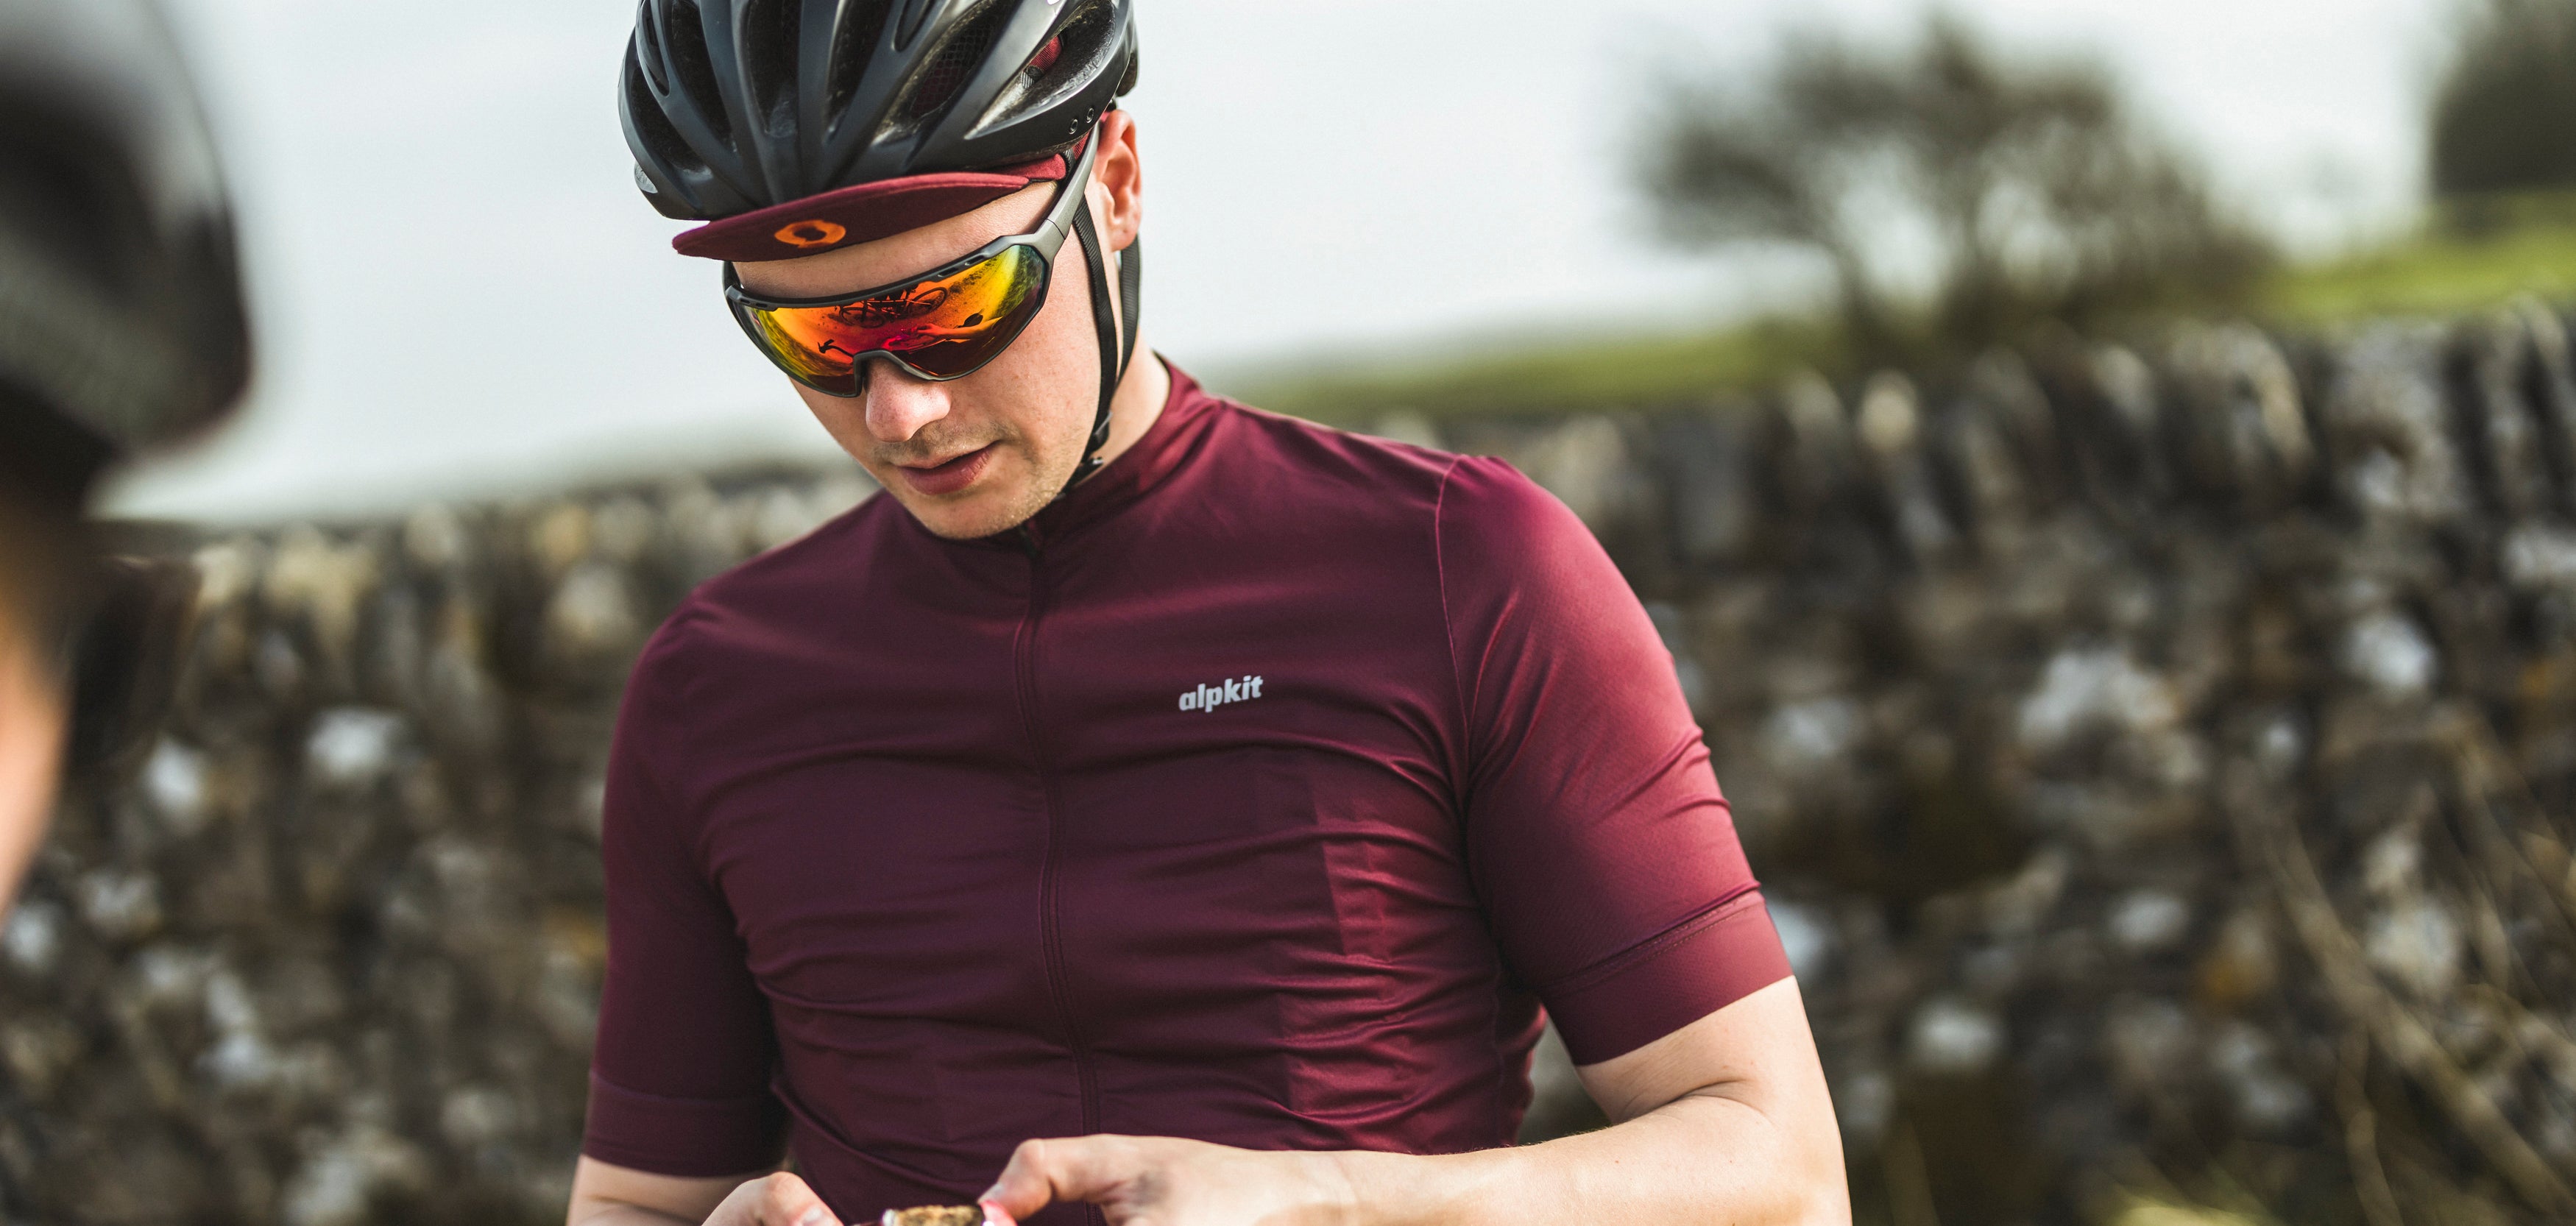 14 Sport/Jersey ideas  cycling jersey design, biking outfit, jersey